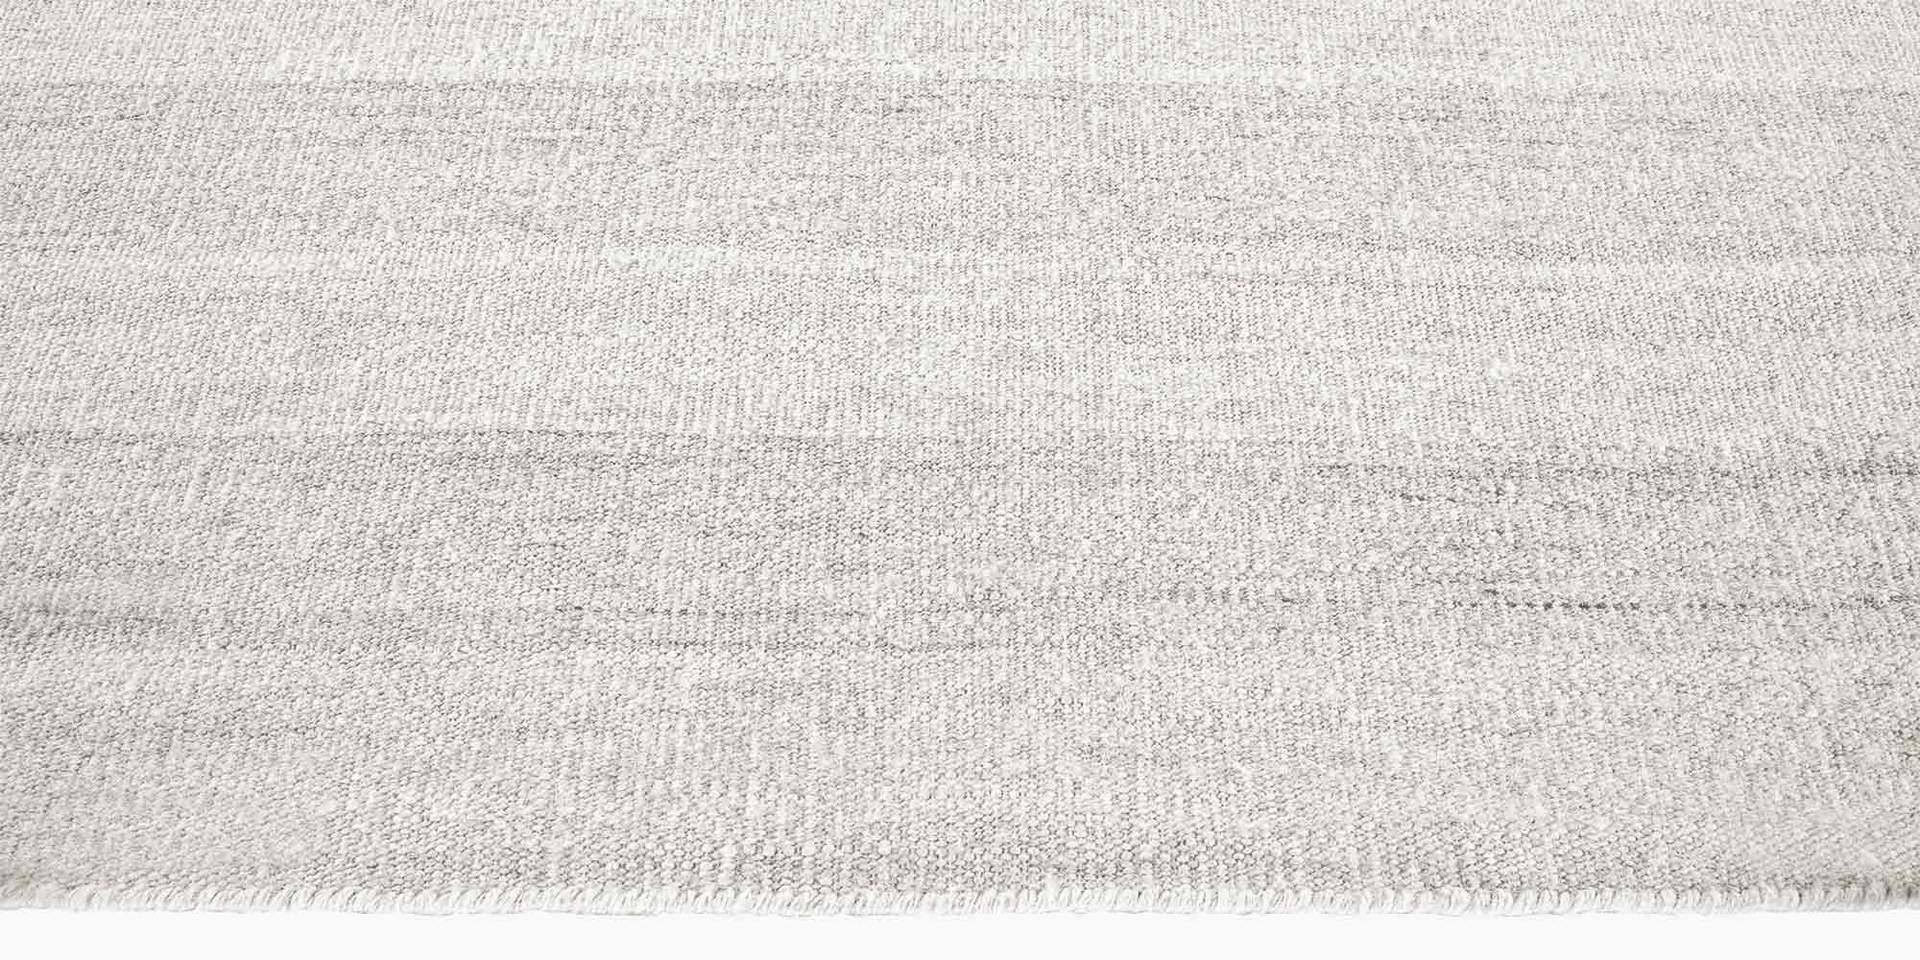 For Sale: Silver (Alterno Silver) Ben Soleimani Alterno Rug– Hand-woven Textured Soft Wool Sand 6'x9' 3